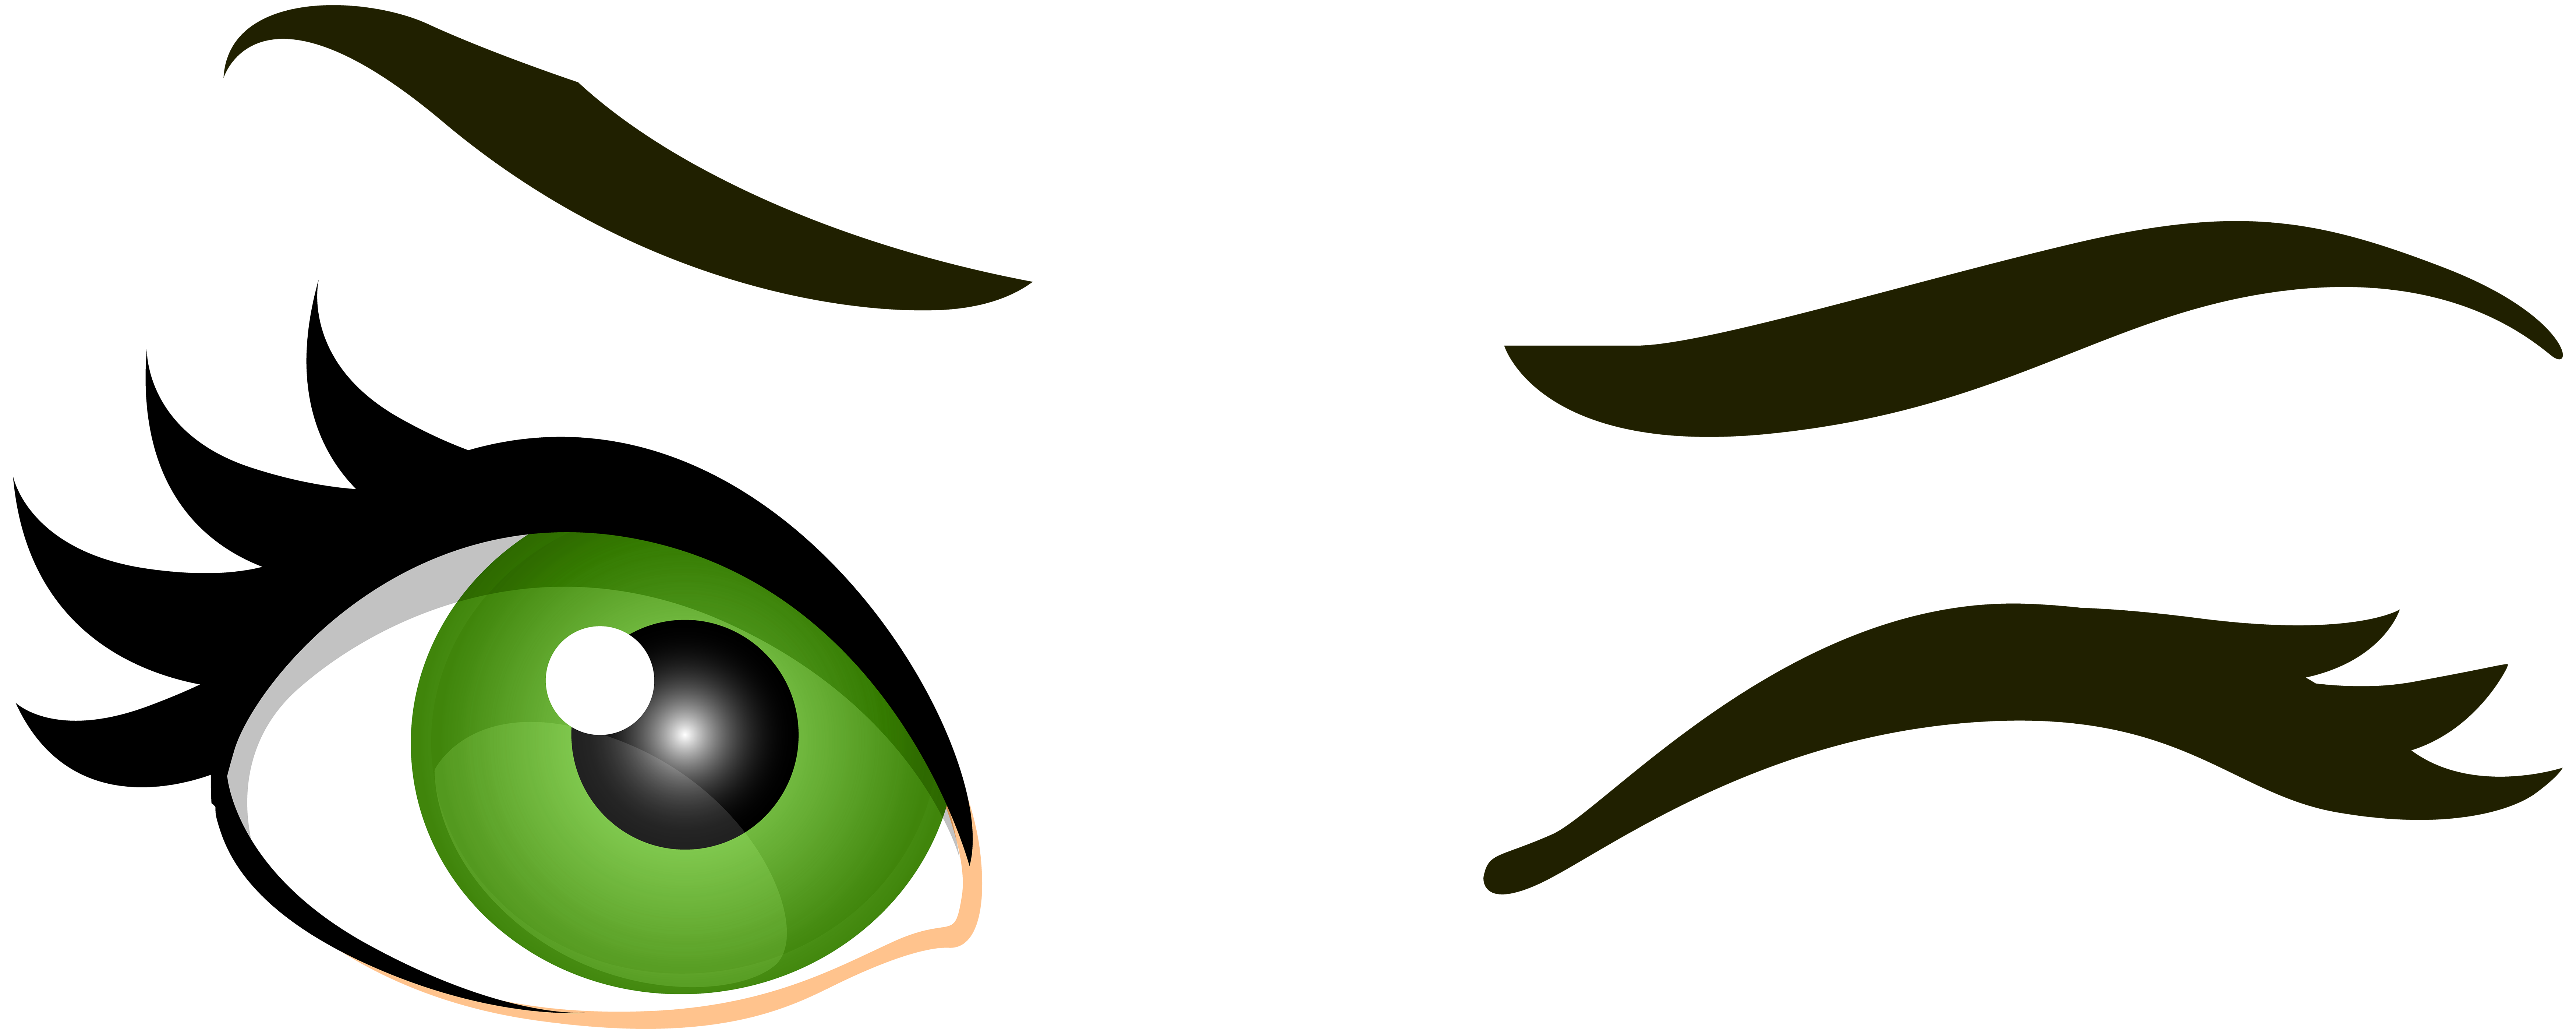 Green Winking Eyes PNG Clip Art.